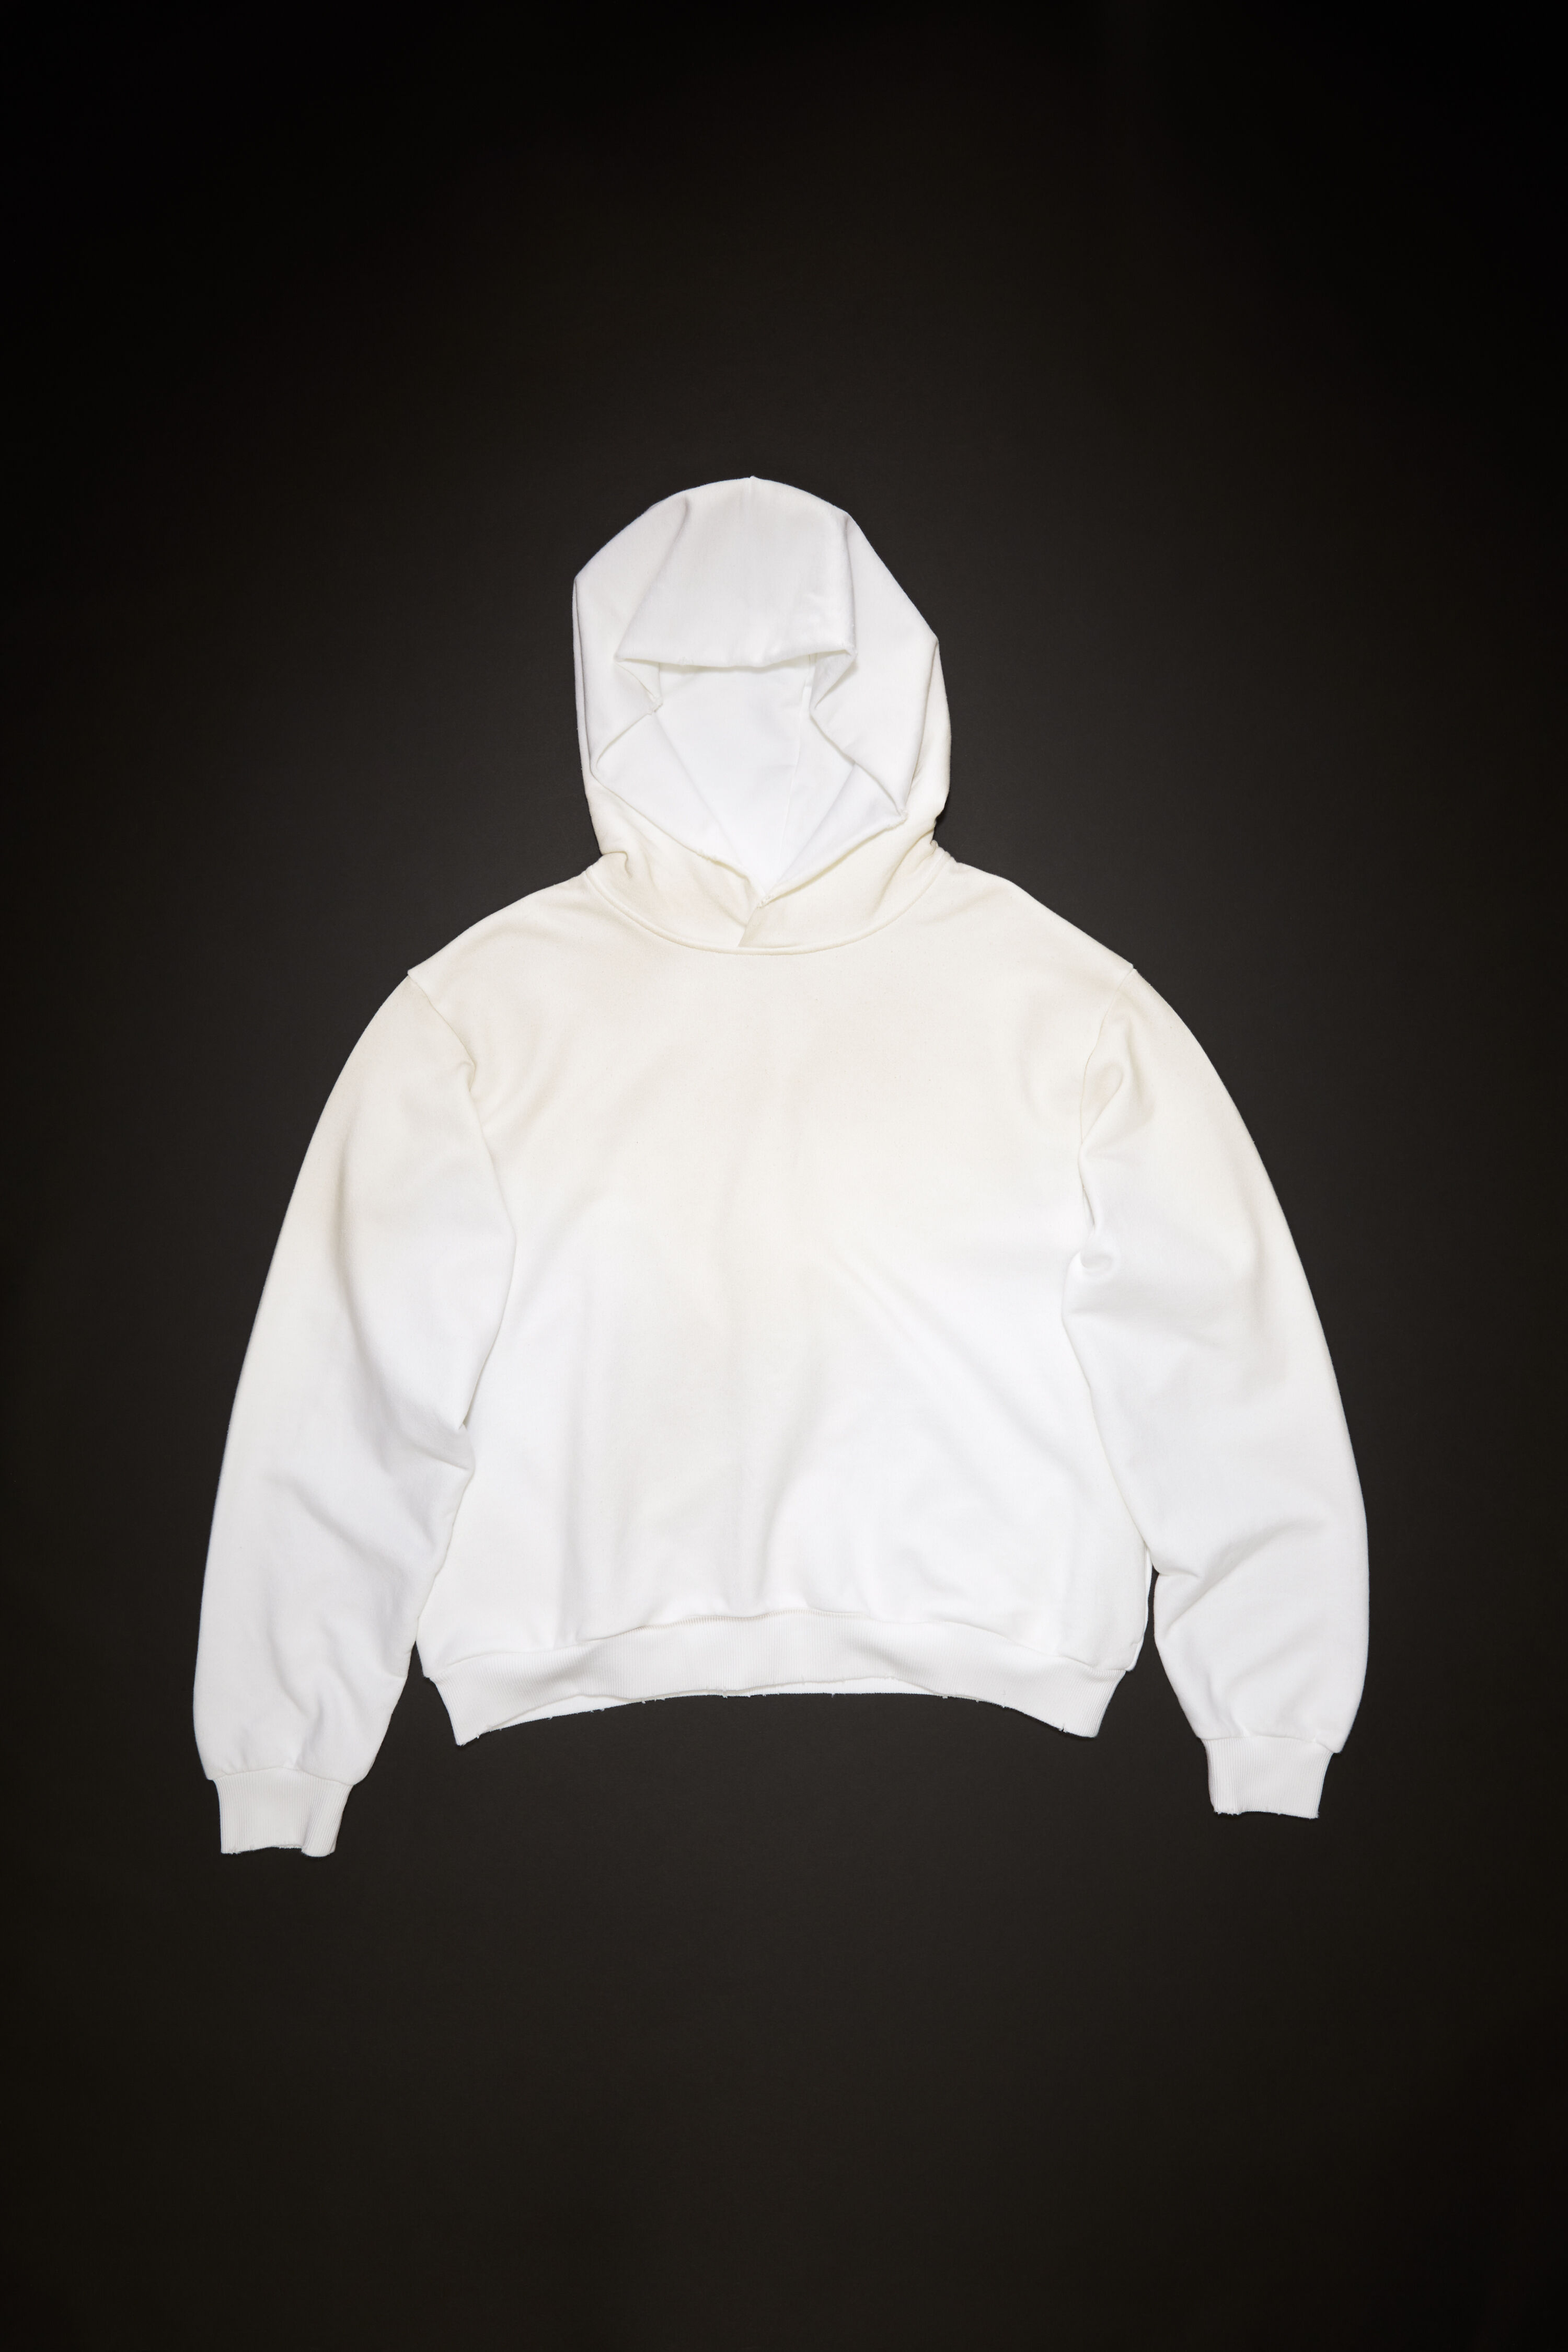 Acne Studios - Logo hooded sweater - Black